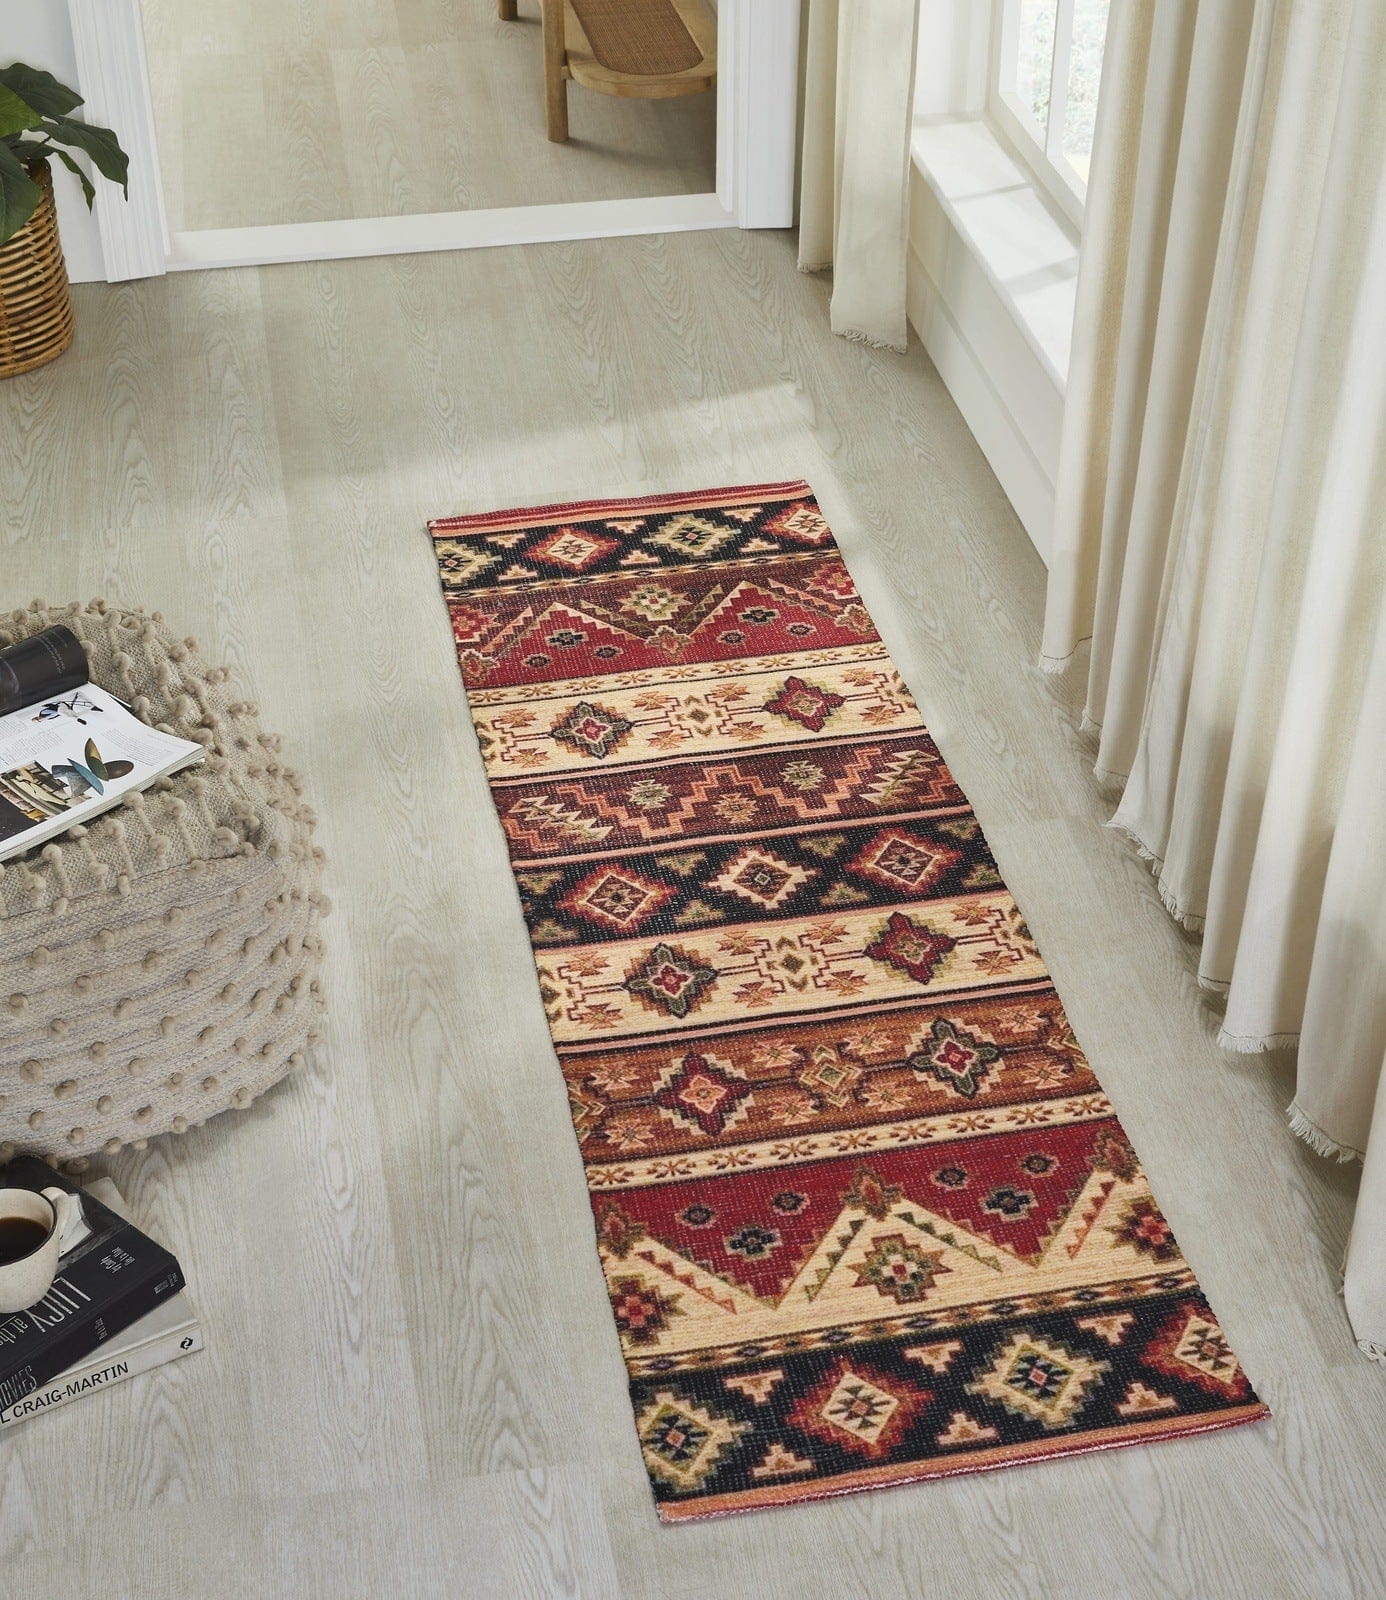 Mona B Printed Vintage Dhurrie Carpet Rug Runner for Living Room Bedroom: 1.83 X 6 Feet Multi Color - PR-113 (2272) - Floor Covering by Mona-B - EOSS, Shop1999, Shop2999, Shop3999